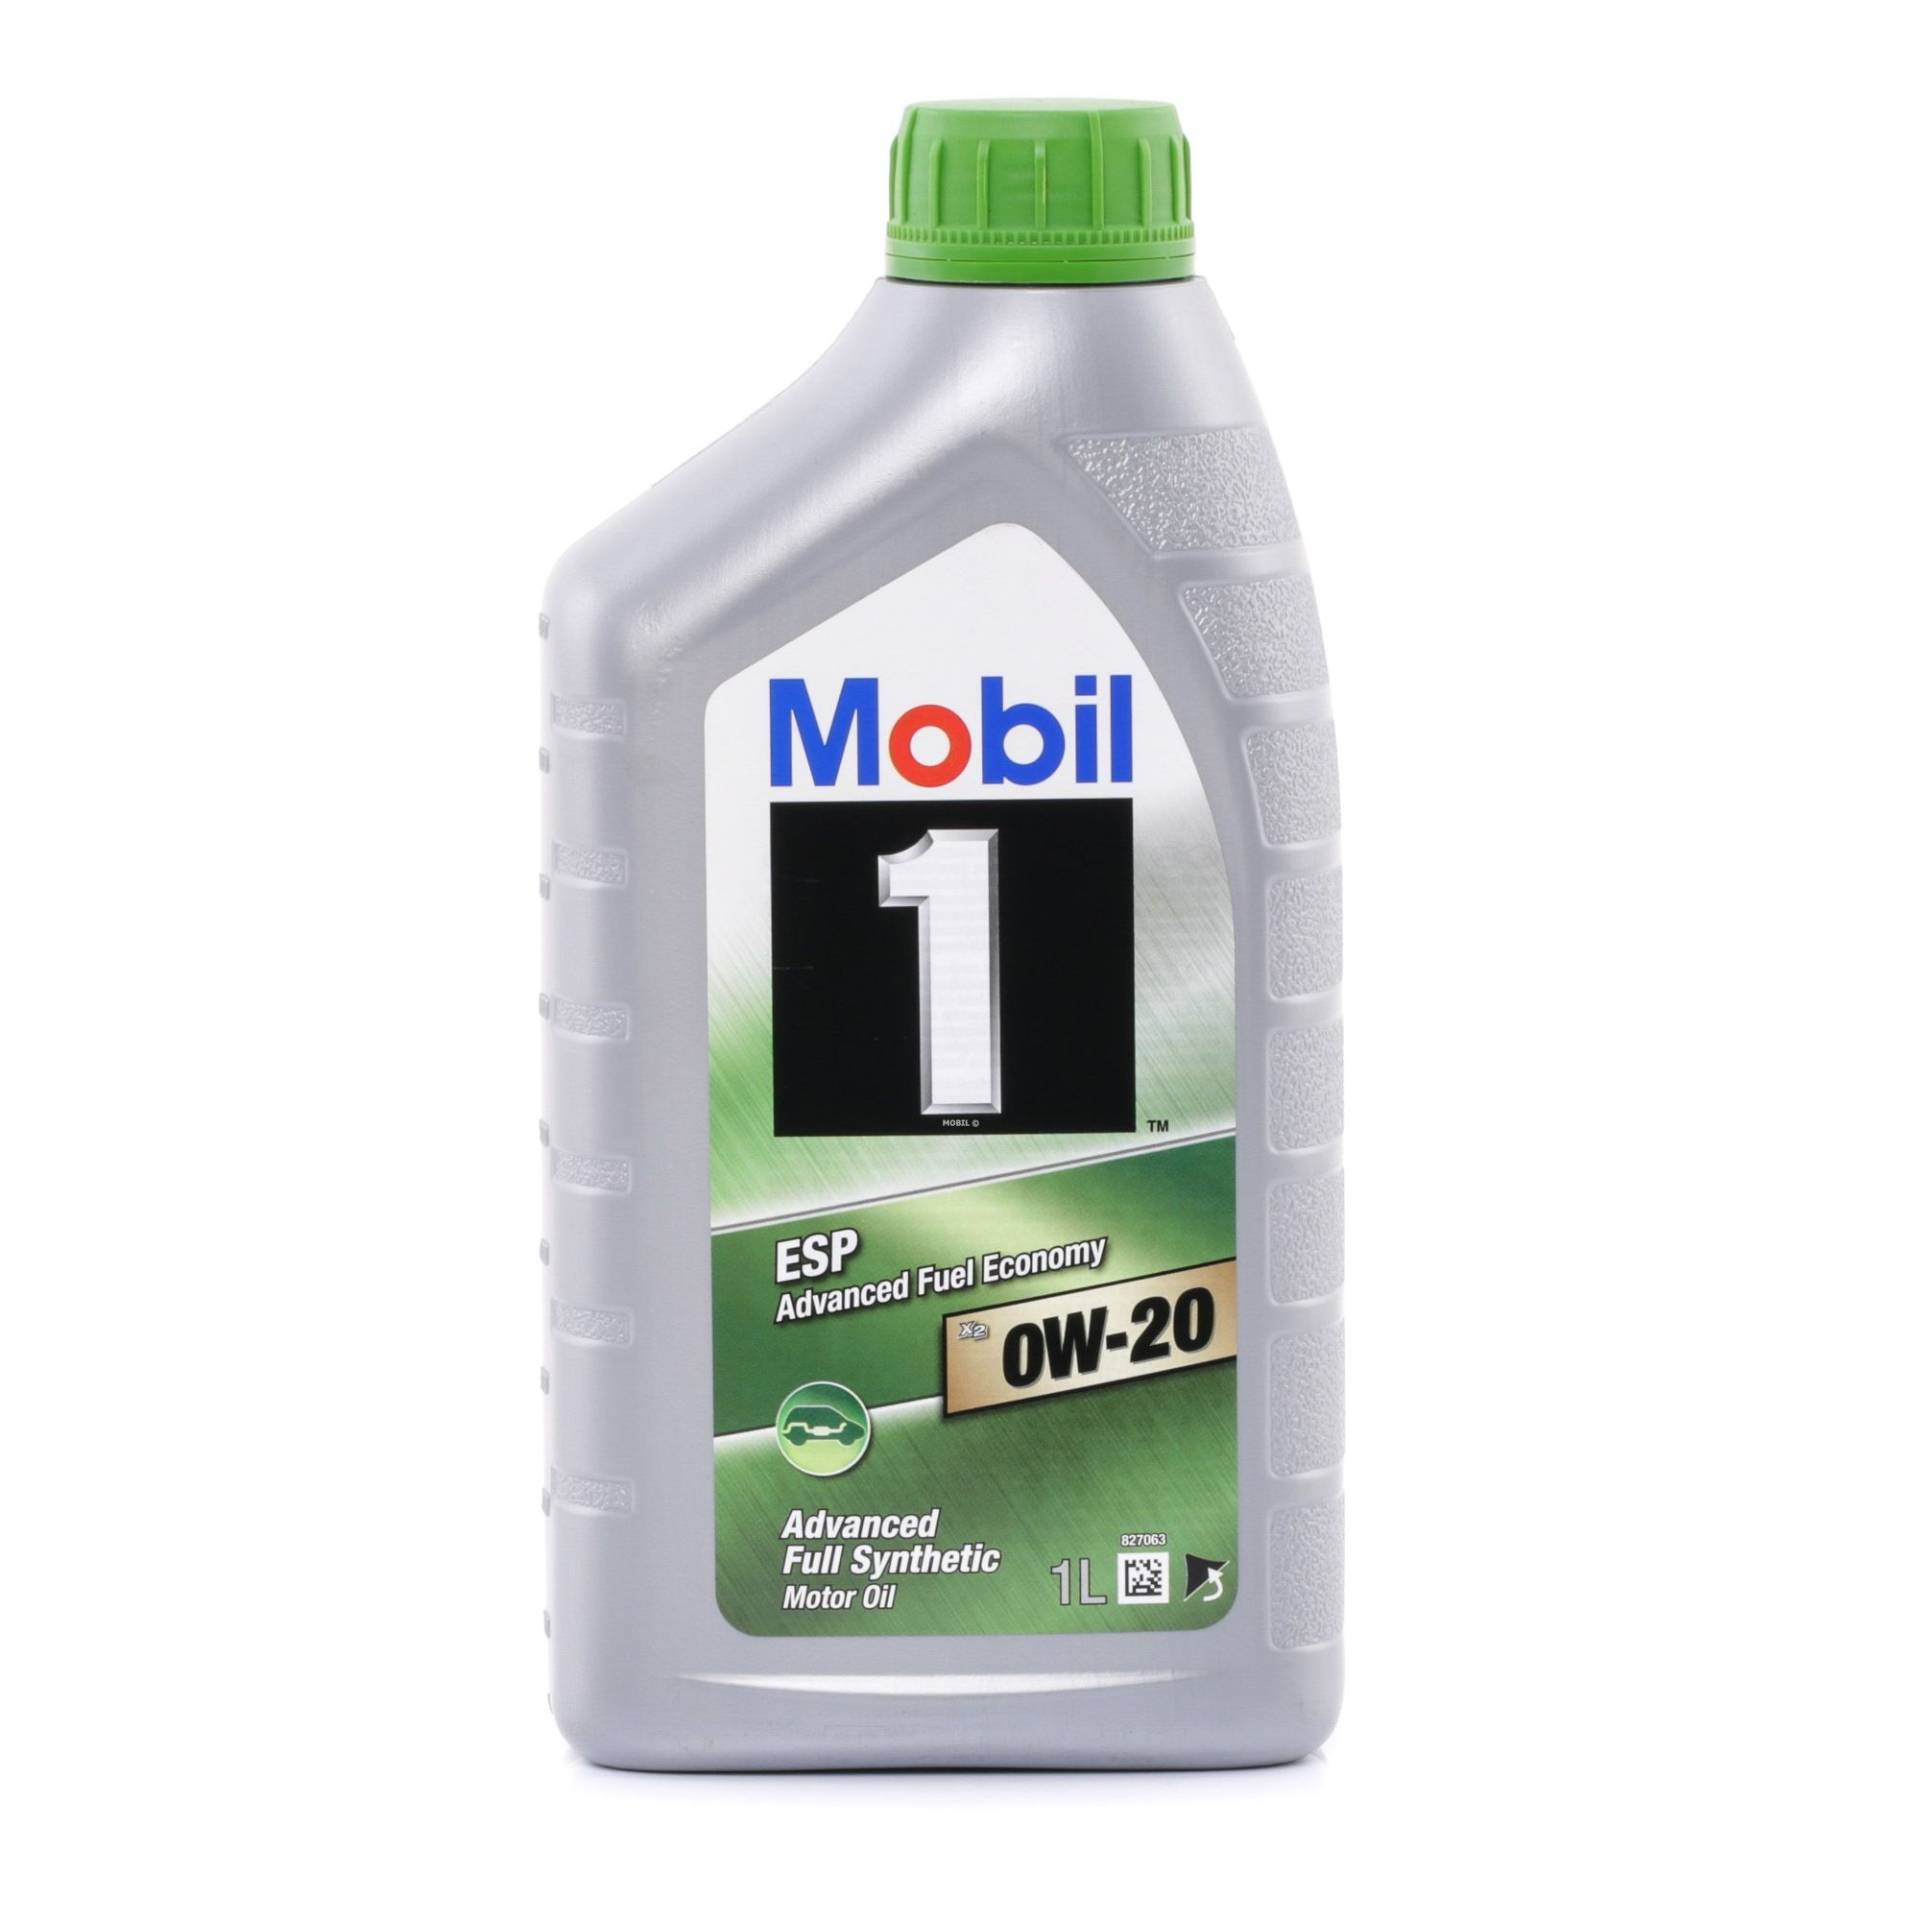 MOBIL Motoröl VW,AUDI,MERCEDES-BENZ 153439 2015101010K7 Motorenöl,Öl,Öl für Motor von MOBIL